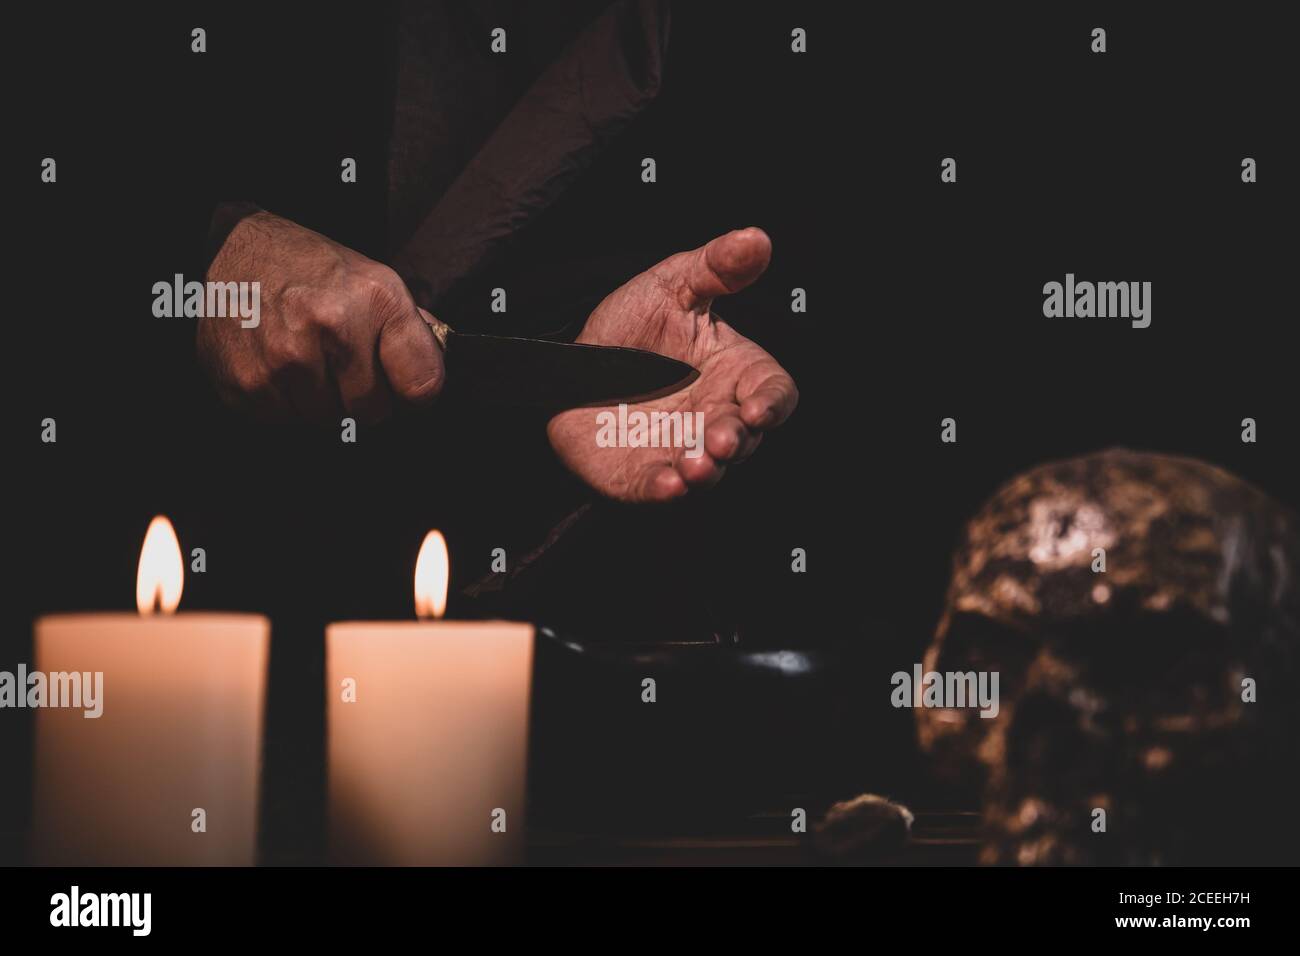 Ritual de sangre, preparación con un cuchillo, brujería o culto occultamente, fondo oscuro con velas y un cráneo humano Foto de stock